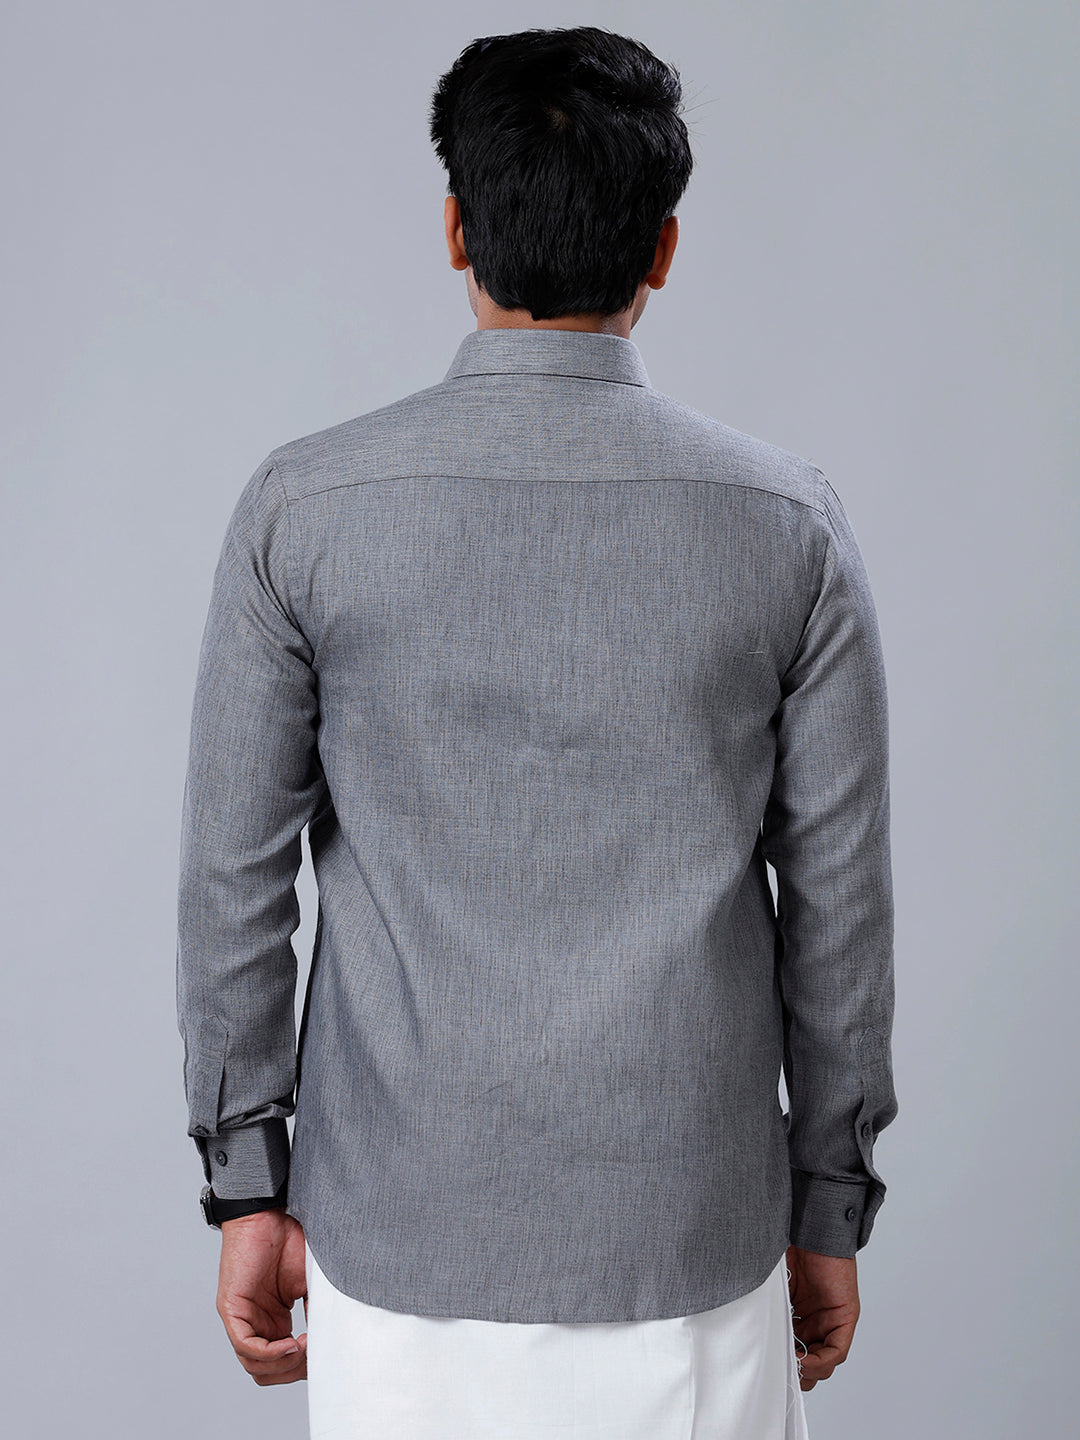 Mens Formal Shirt Full Sleeves Grey T26 TB7-Back view